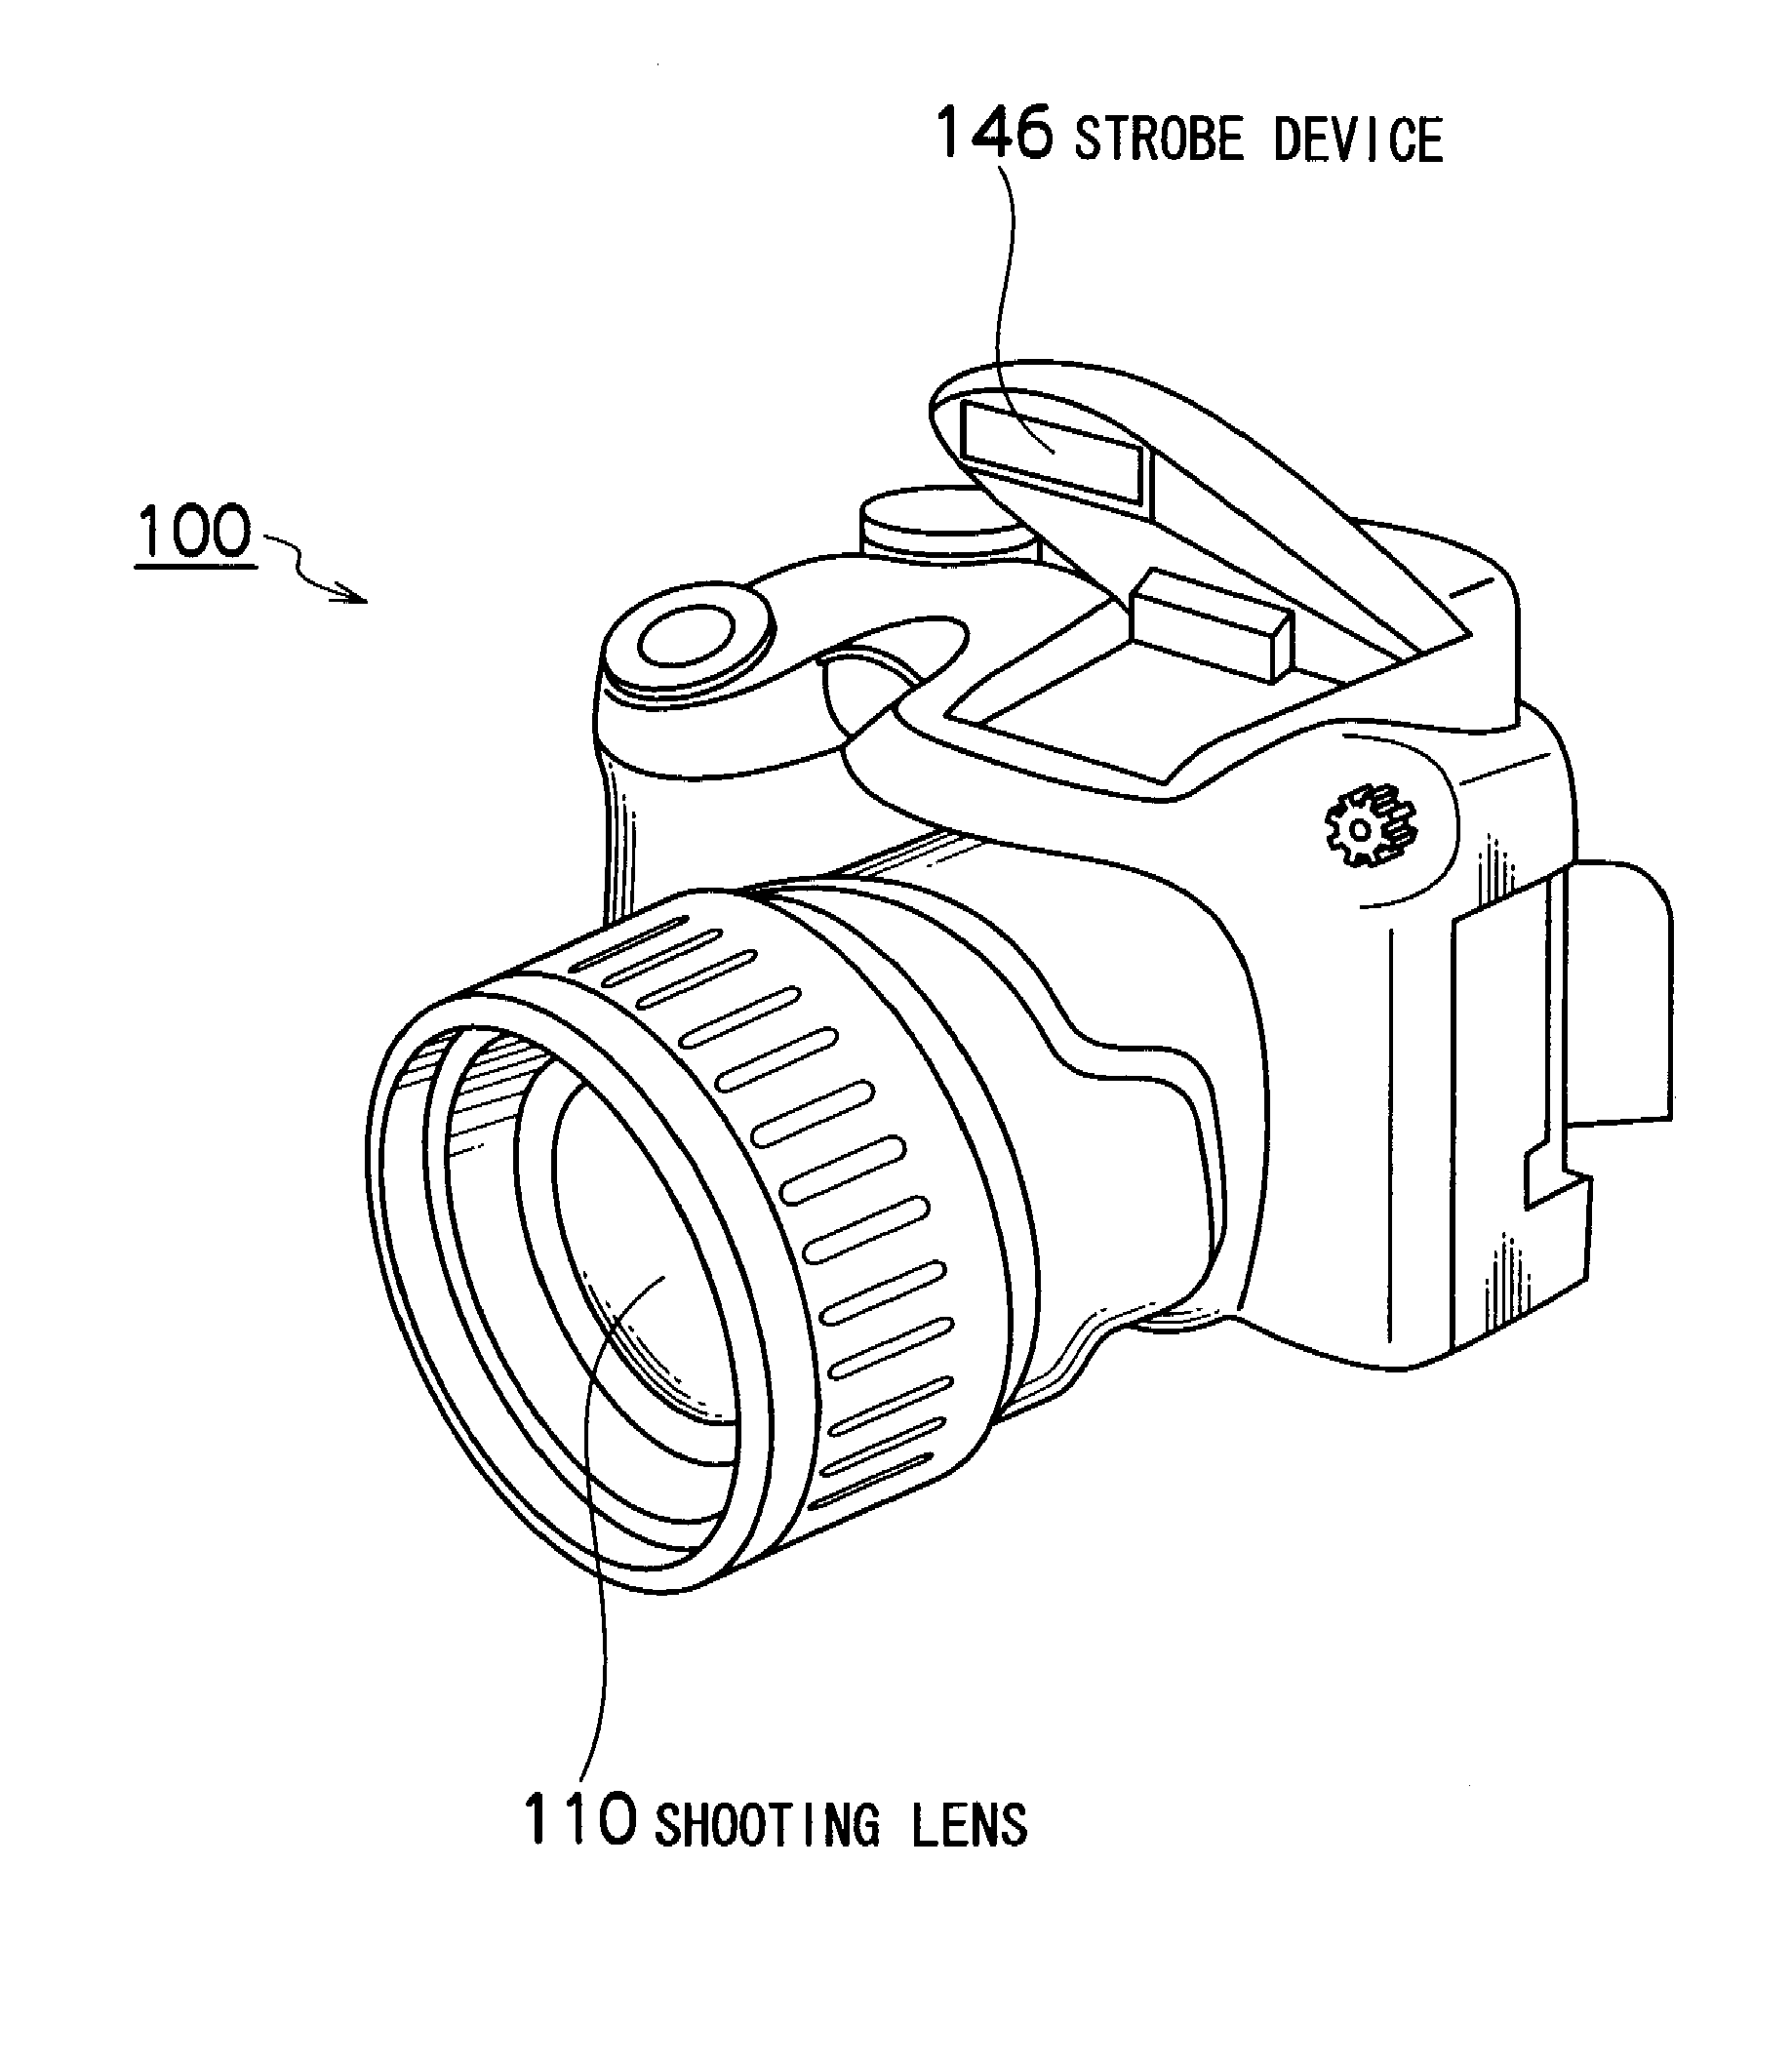 Camera and strobe device